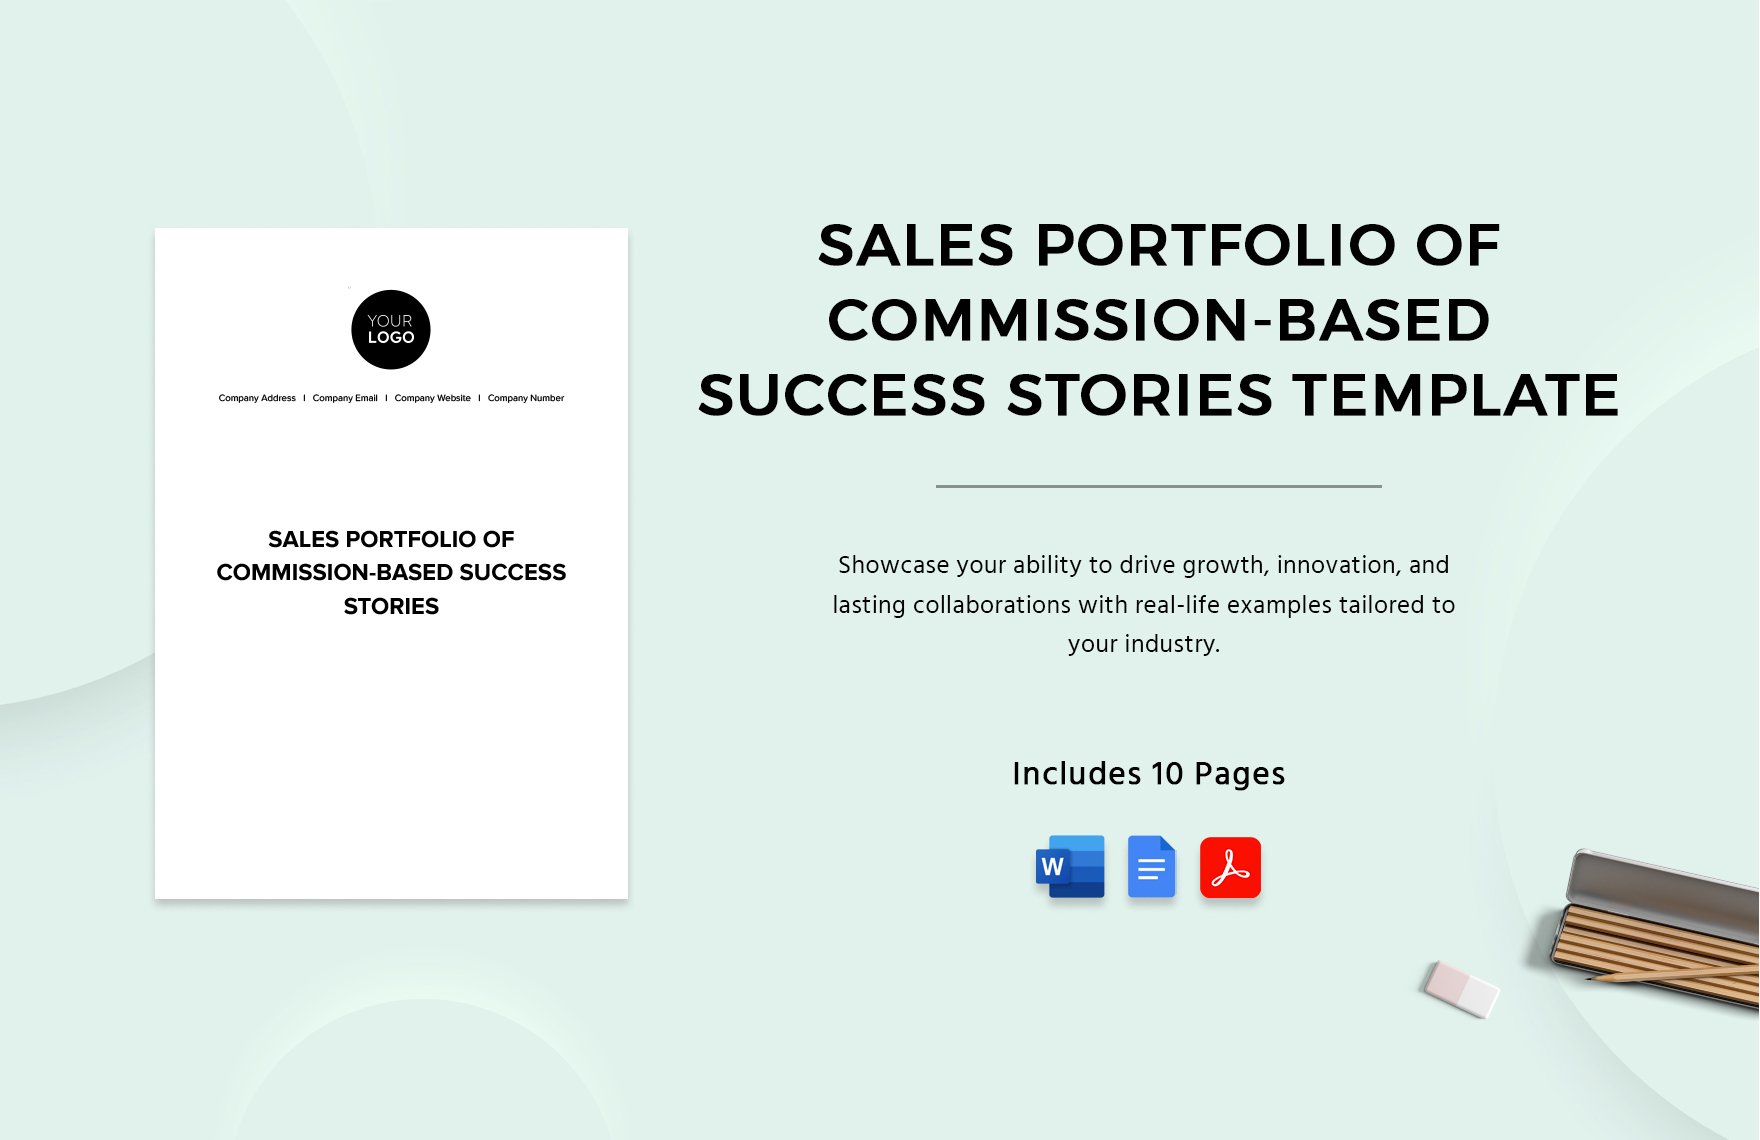 Sales Portfolio of Commission-Based Success Stories Template